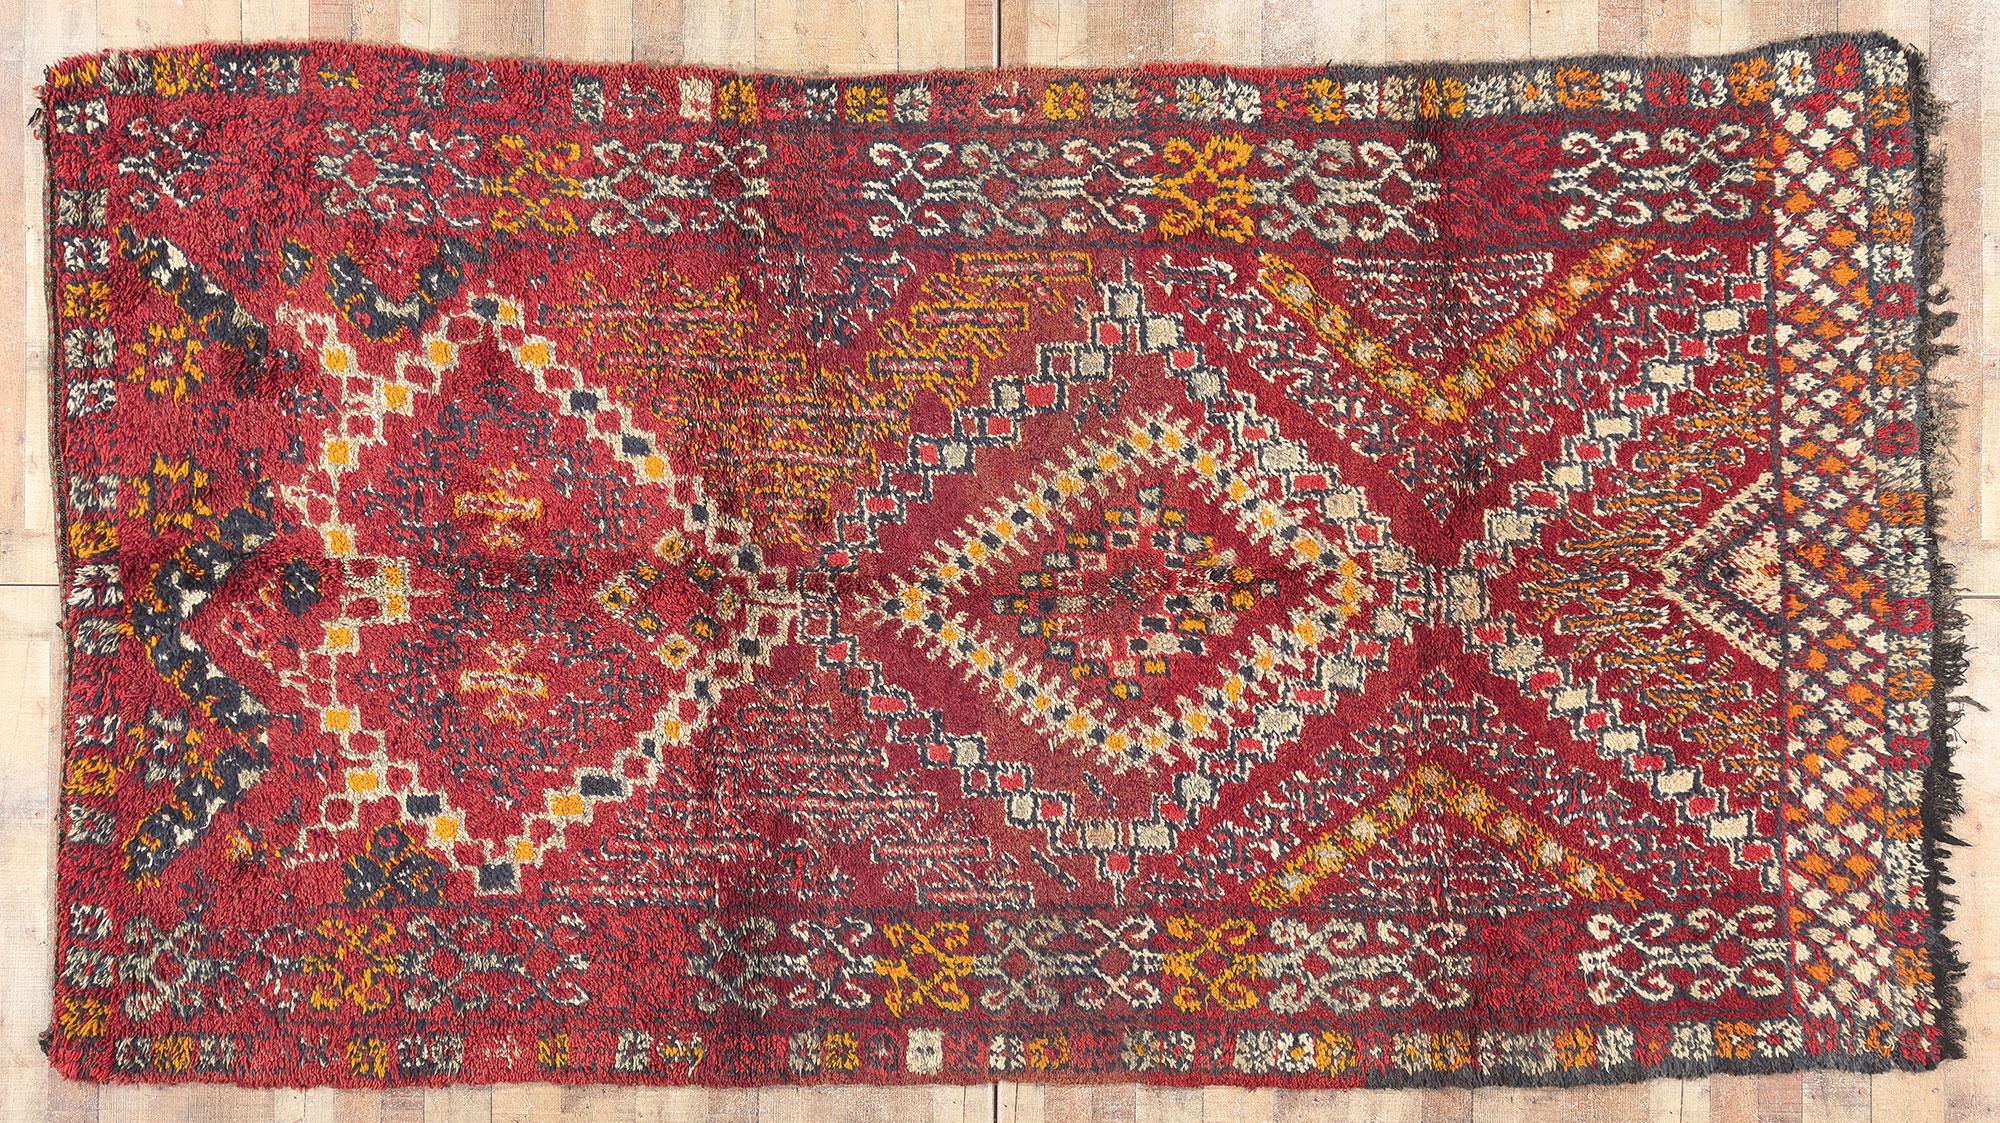 Vintage Beni MGuild Moroccan Rug, Tribal Enchantment Meets Midcentury Modern For Sale 2